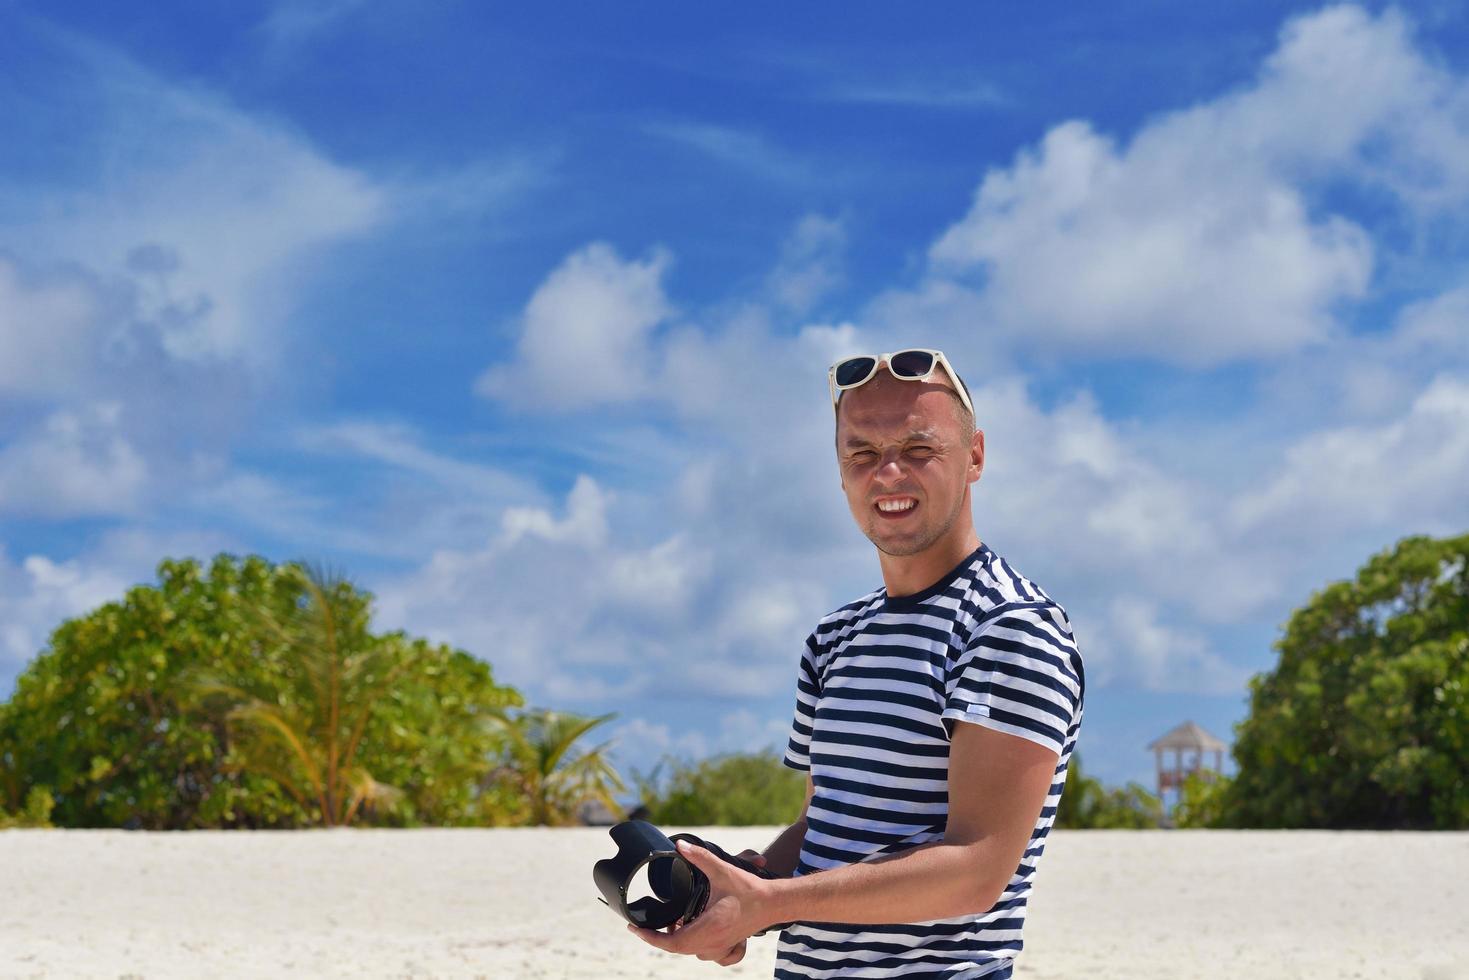 photographer taking photo on beach